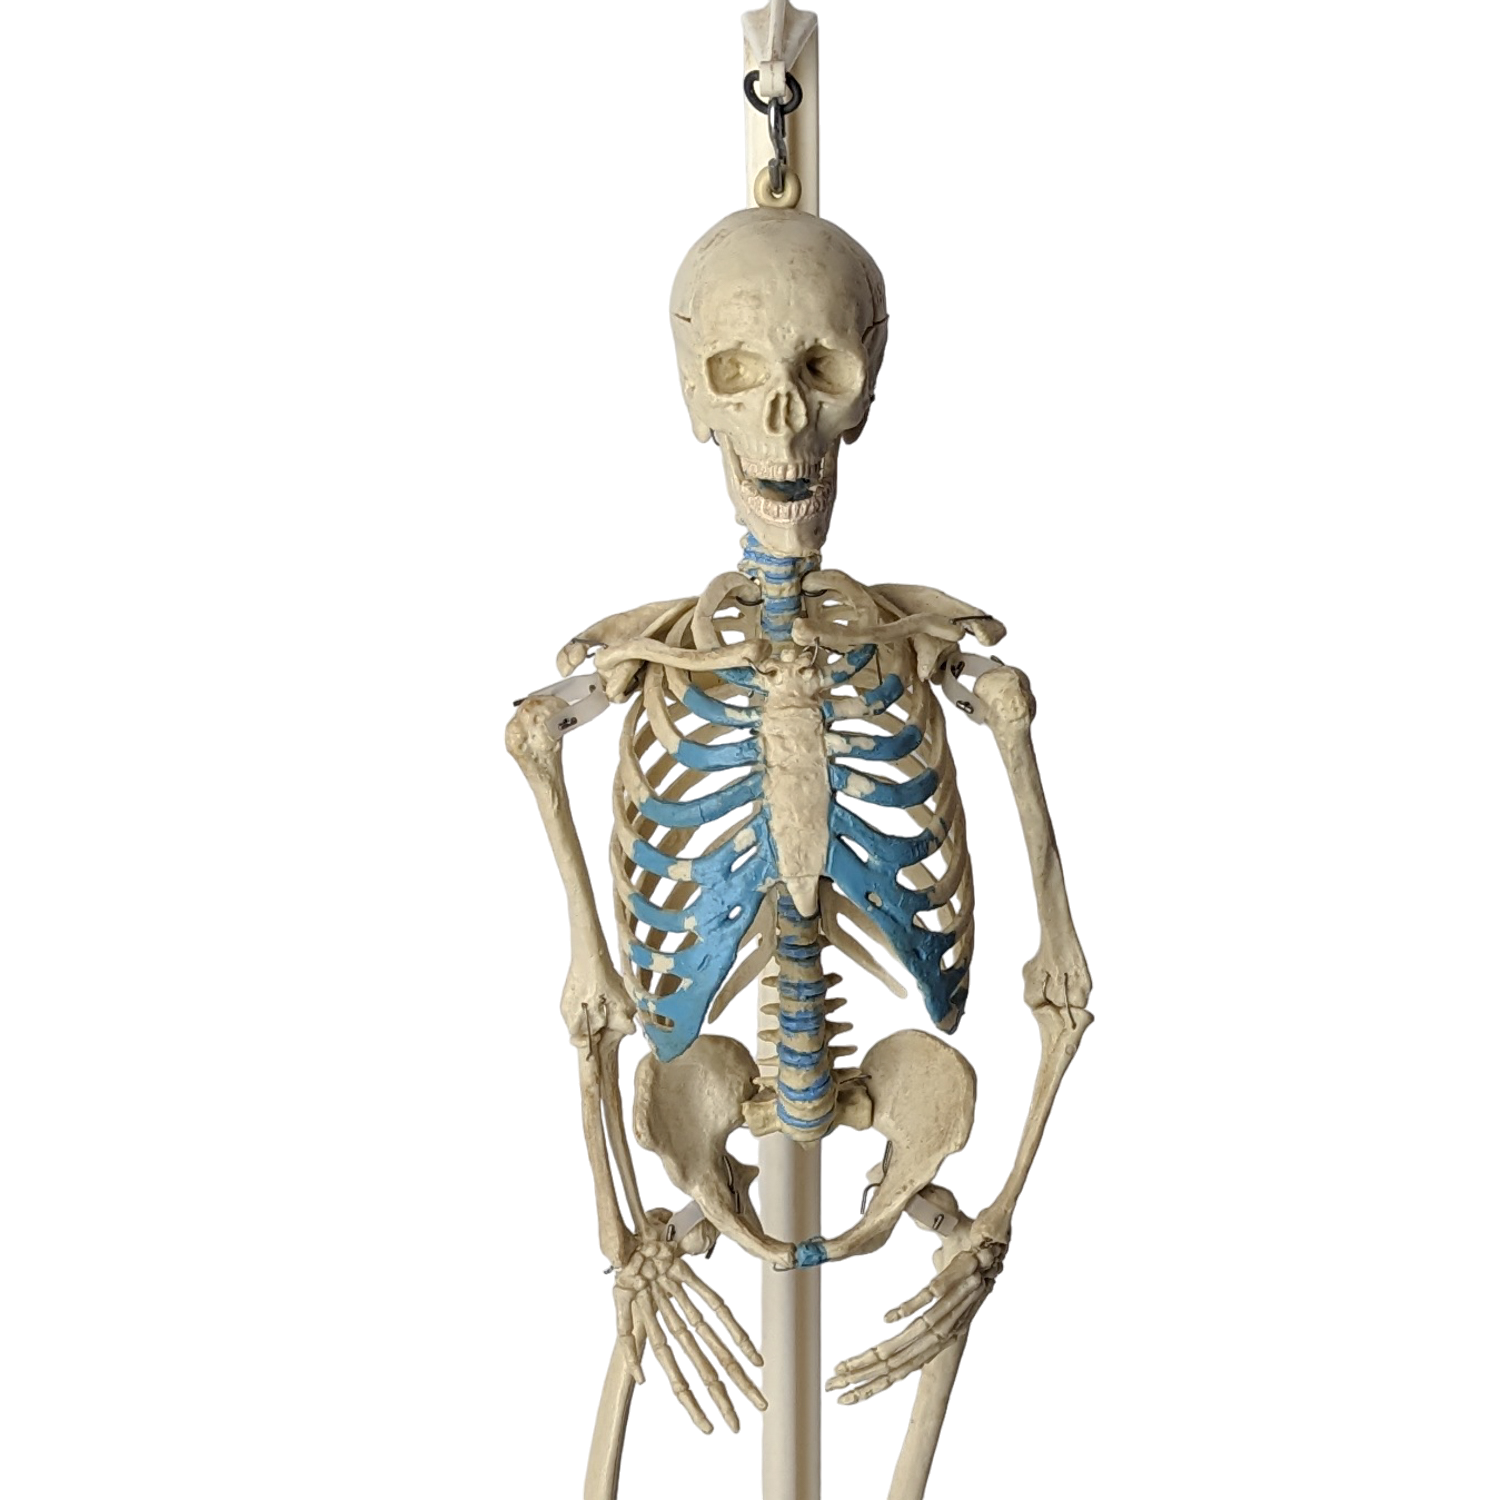 Rare Johns Hopkins Anatomical Model Human Skeleton